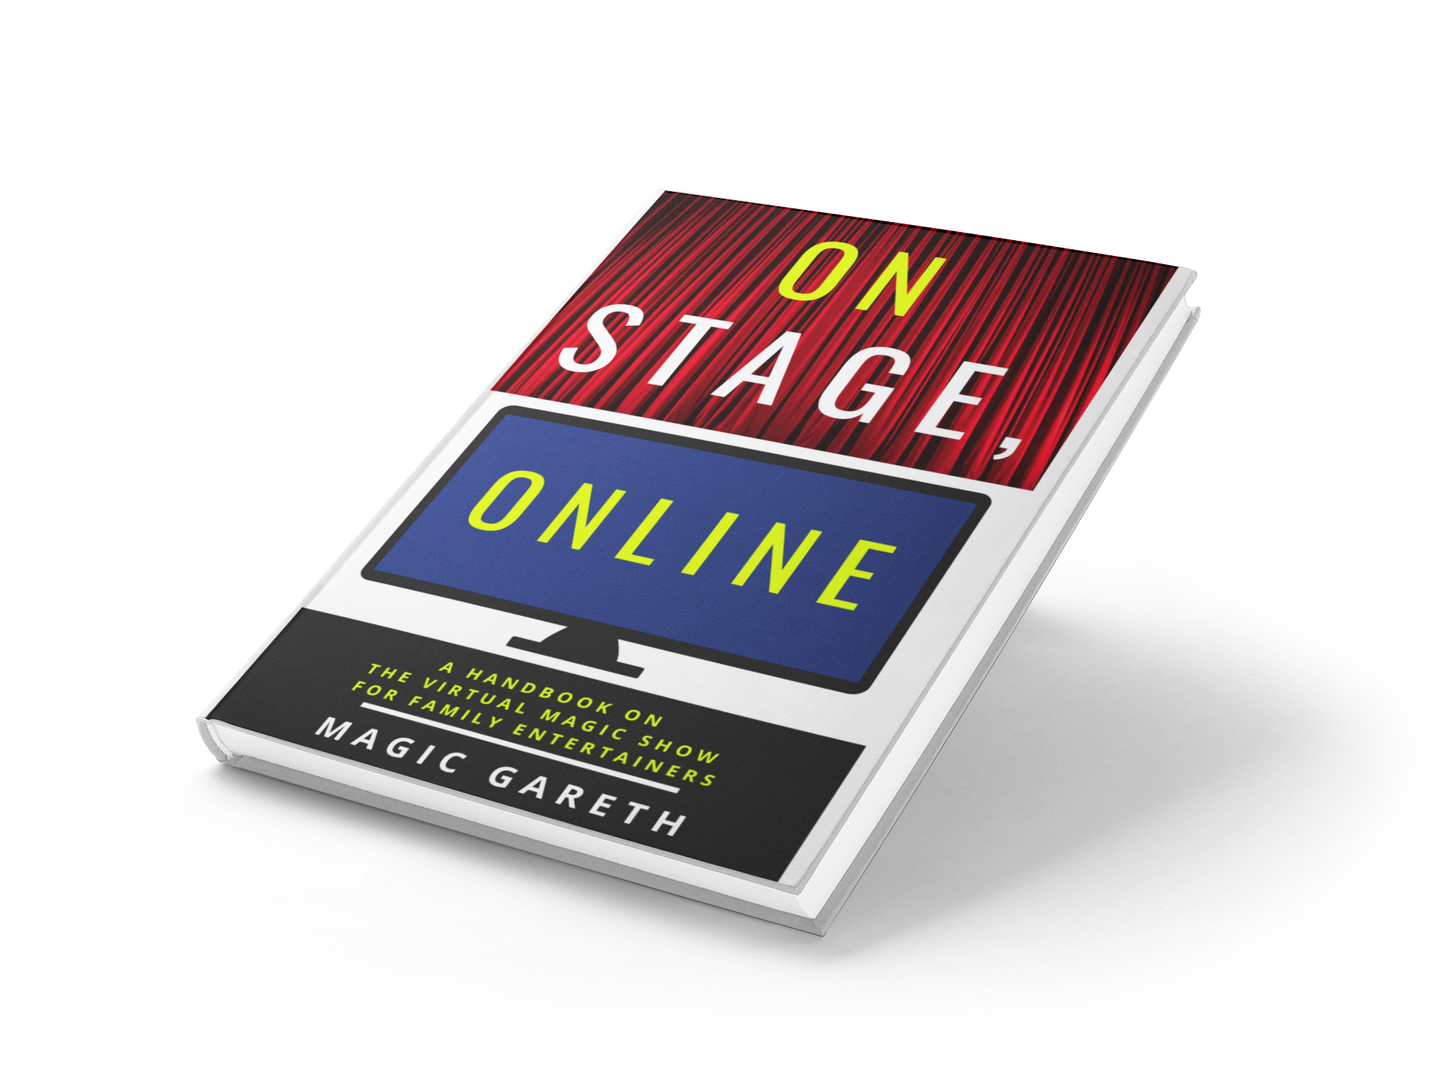 On Stage ONLINE By Gareth White (Magic Gareth) PDF DOWNLOAD